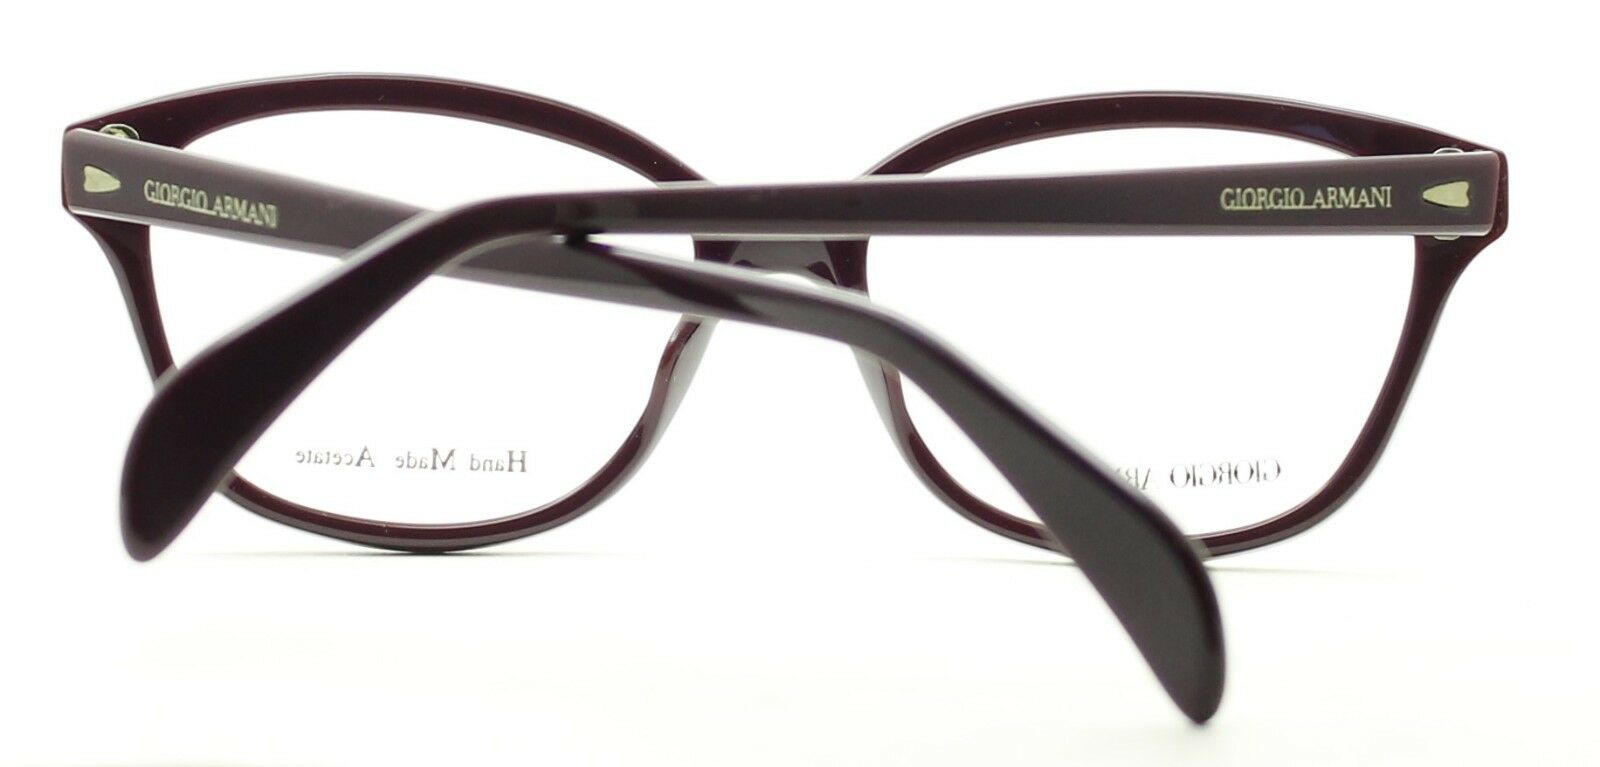 GIORGIO ARMANI GA 818 RYY Eyewear FRAMES RX Optical Eyeglasses Glasses New ITALY